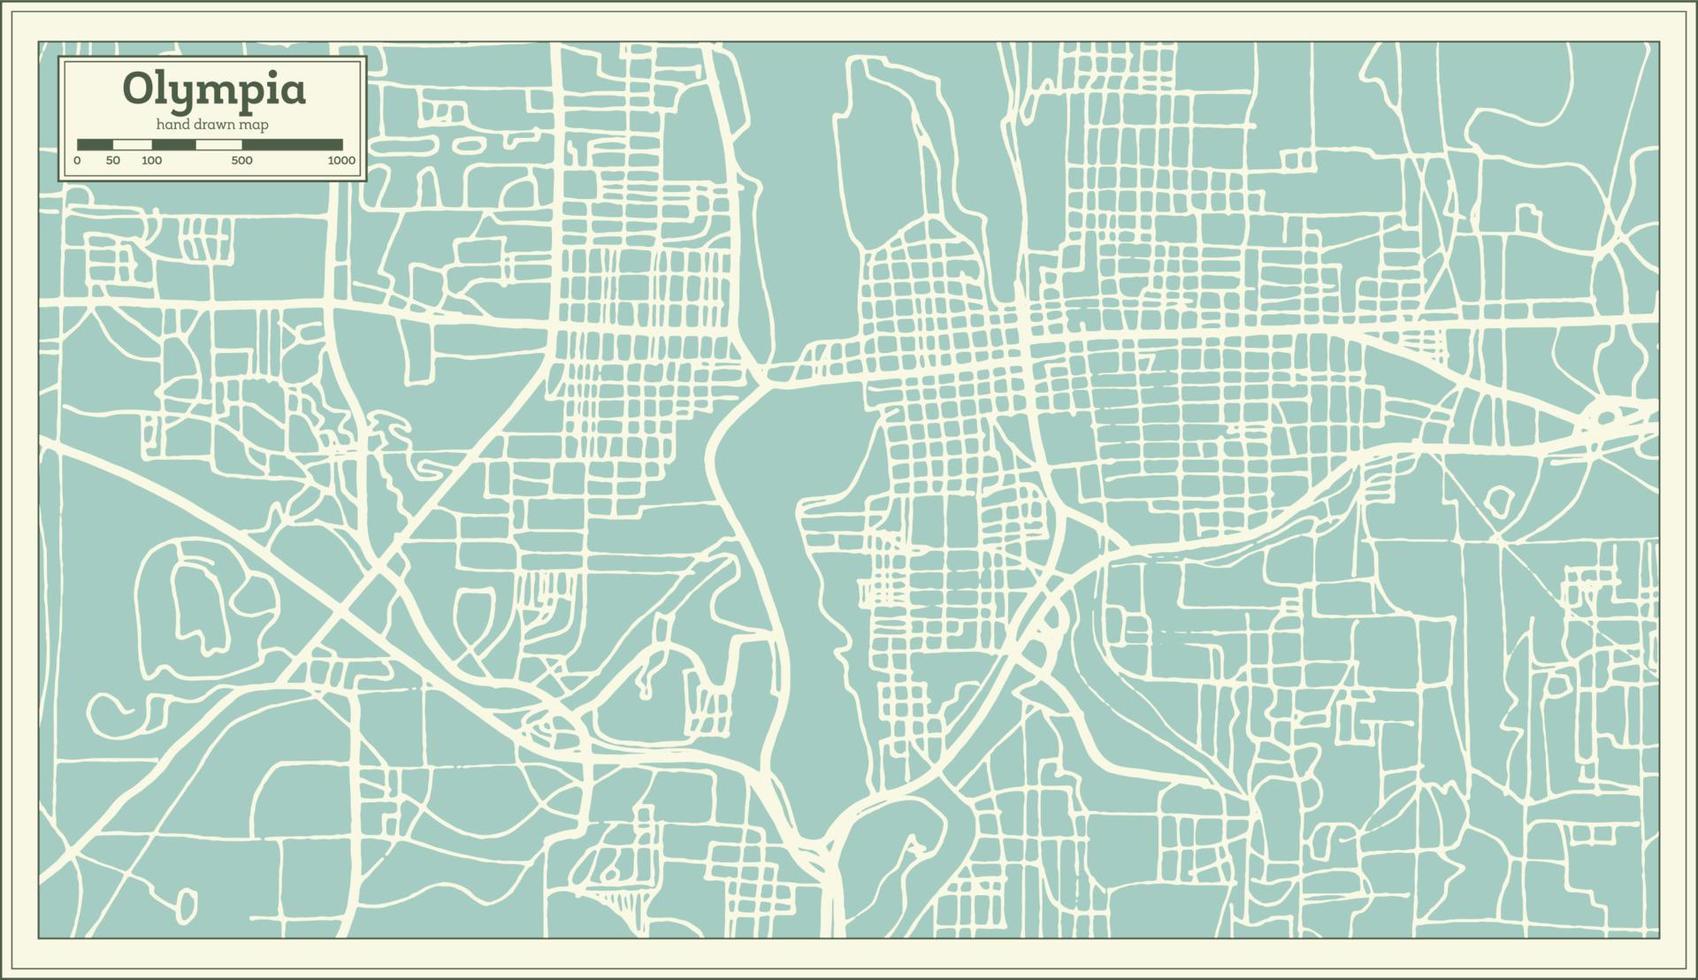 olympia Washington Verenigde Staten van Amerika stad kaart in retro stijl. schets kaart. vector